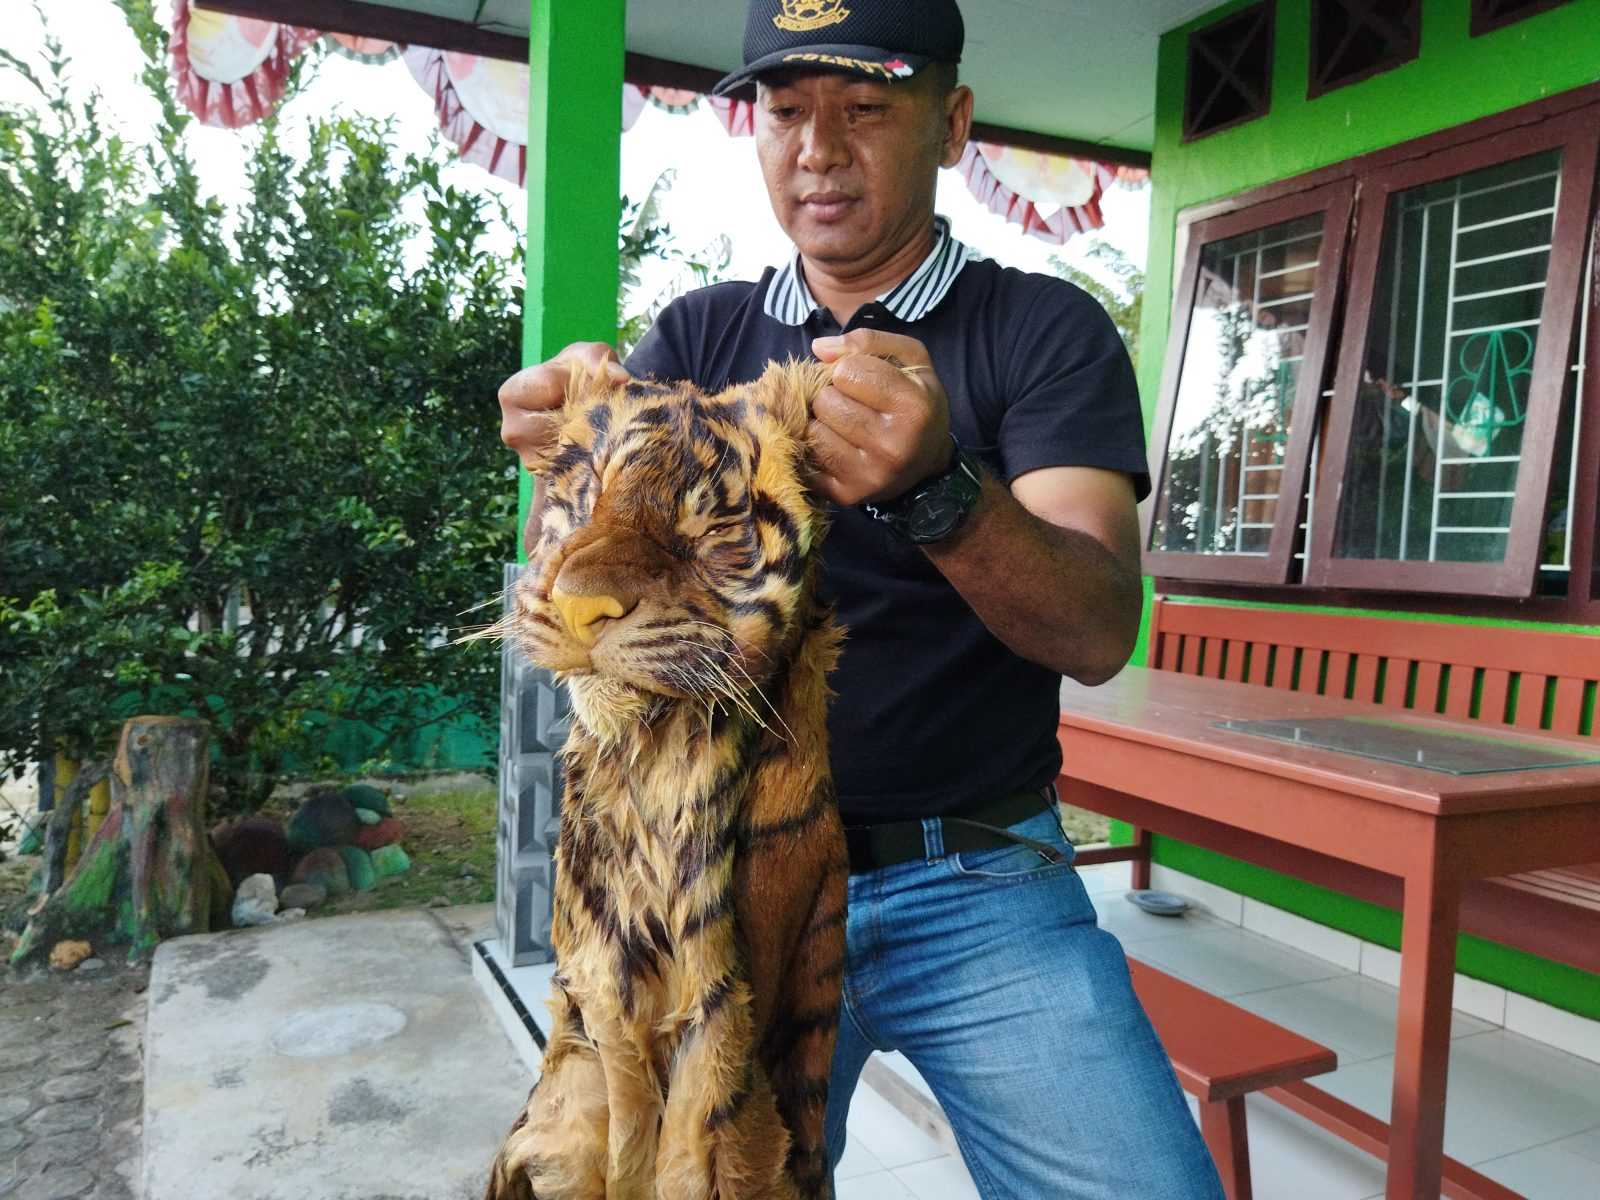 Petugas Resort TNKS Mukomuko Provinsi Bengkulu menunjukkan barang bukti harimau sumatera yang terkena jerat pemburu. | Foto: Harry Siswoyo/Ekuatorial